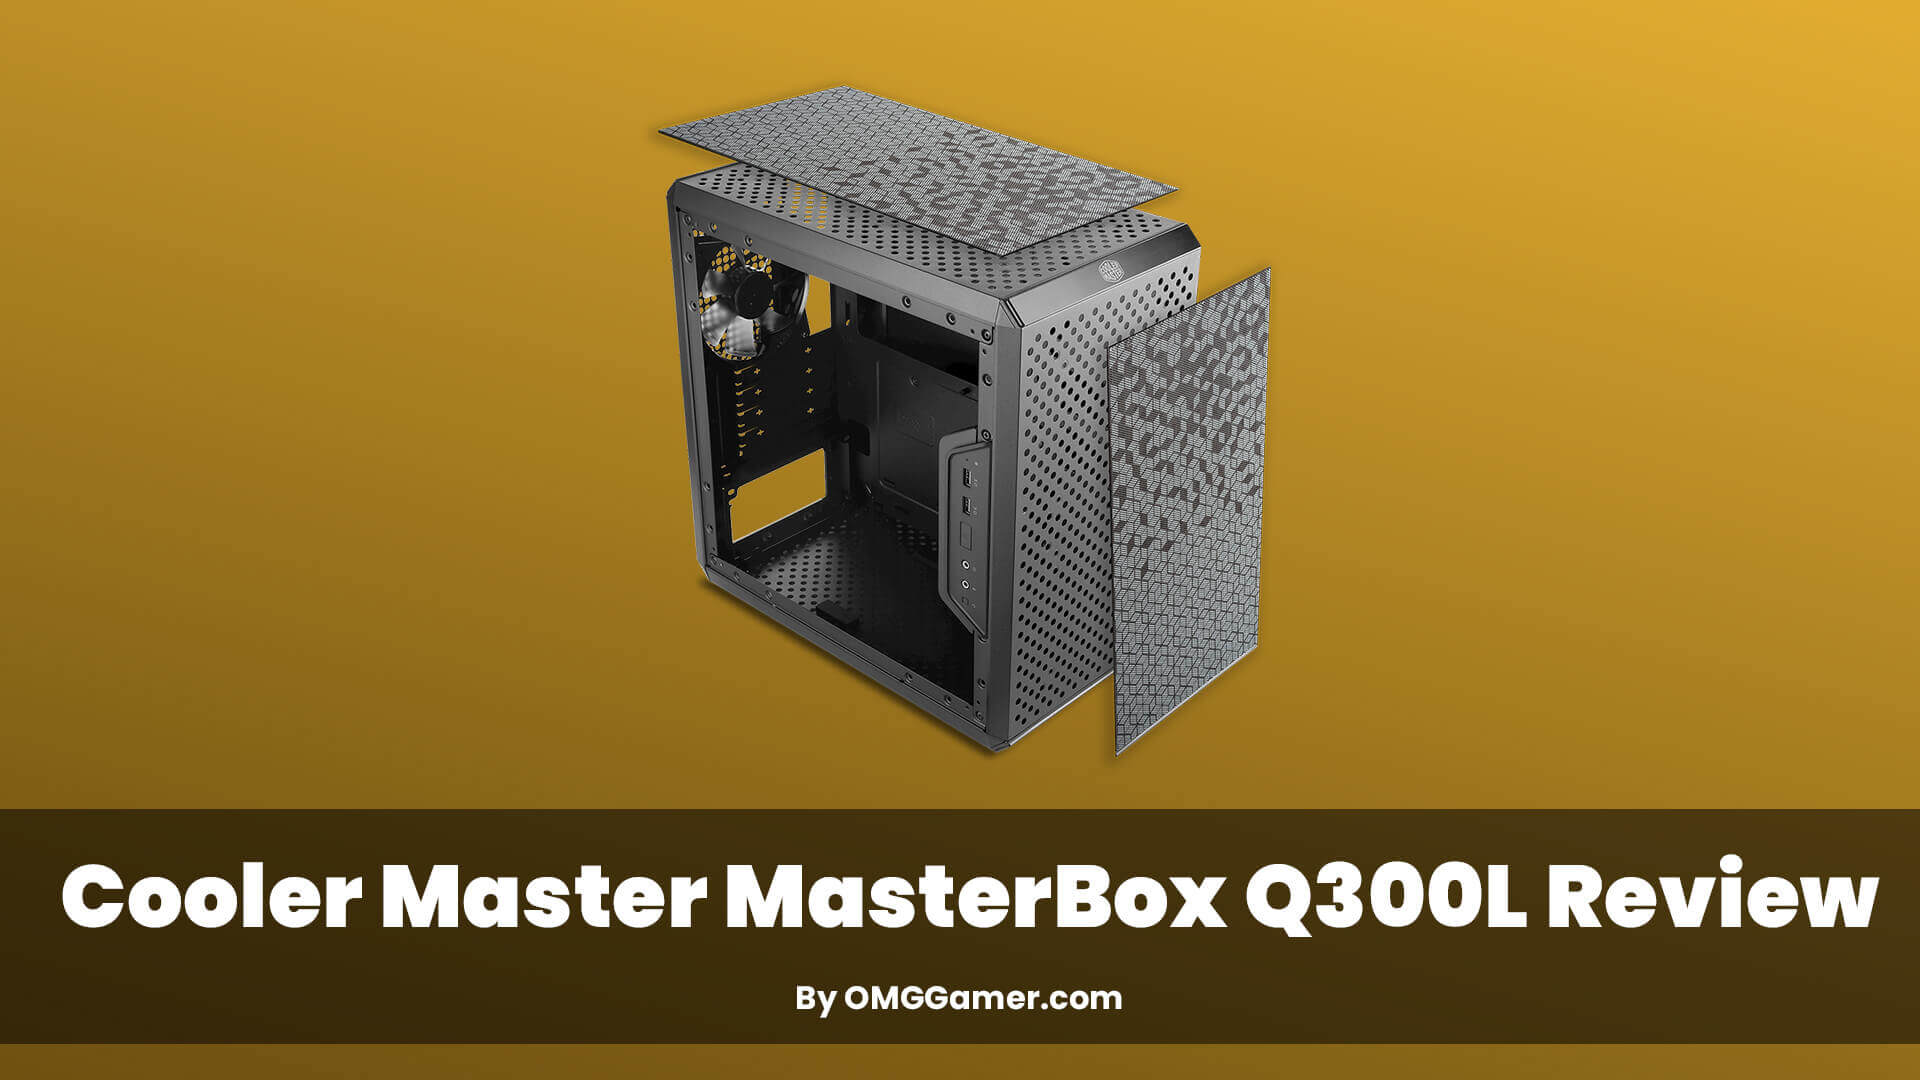 Cooler Master MasterBox Q300L Review